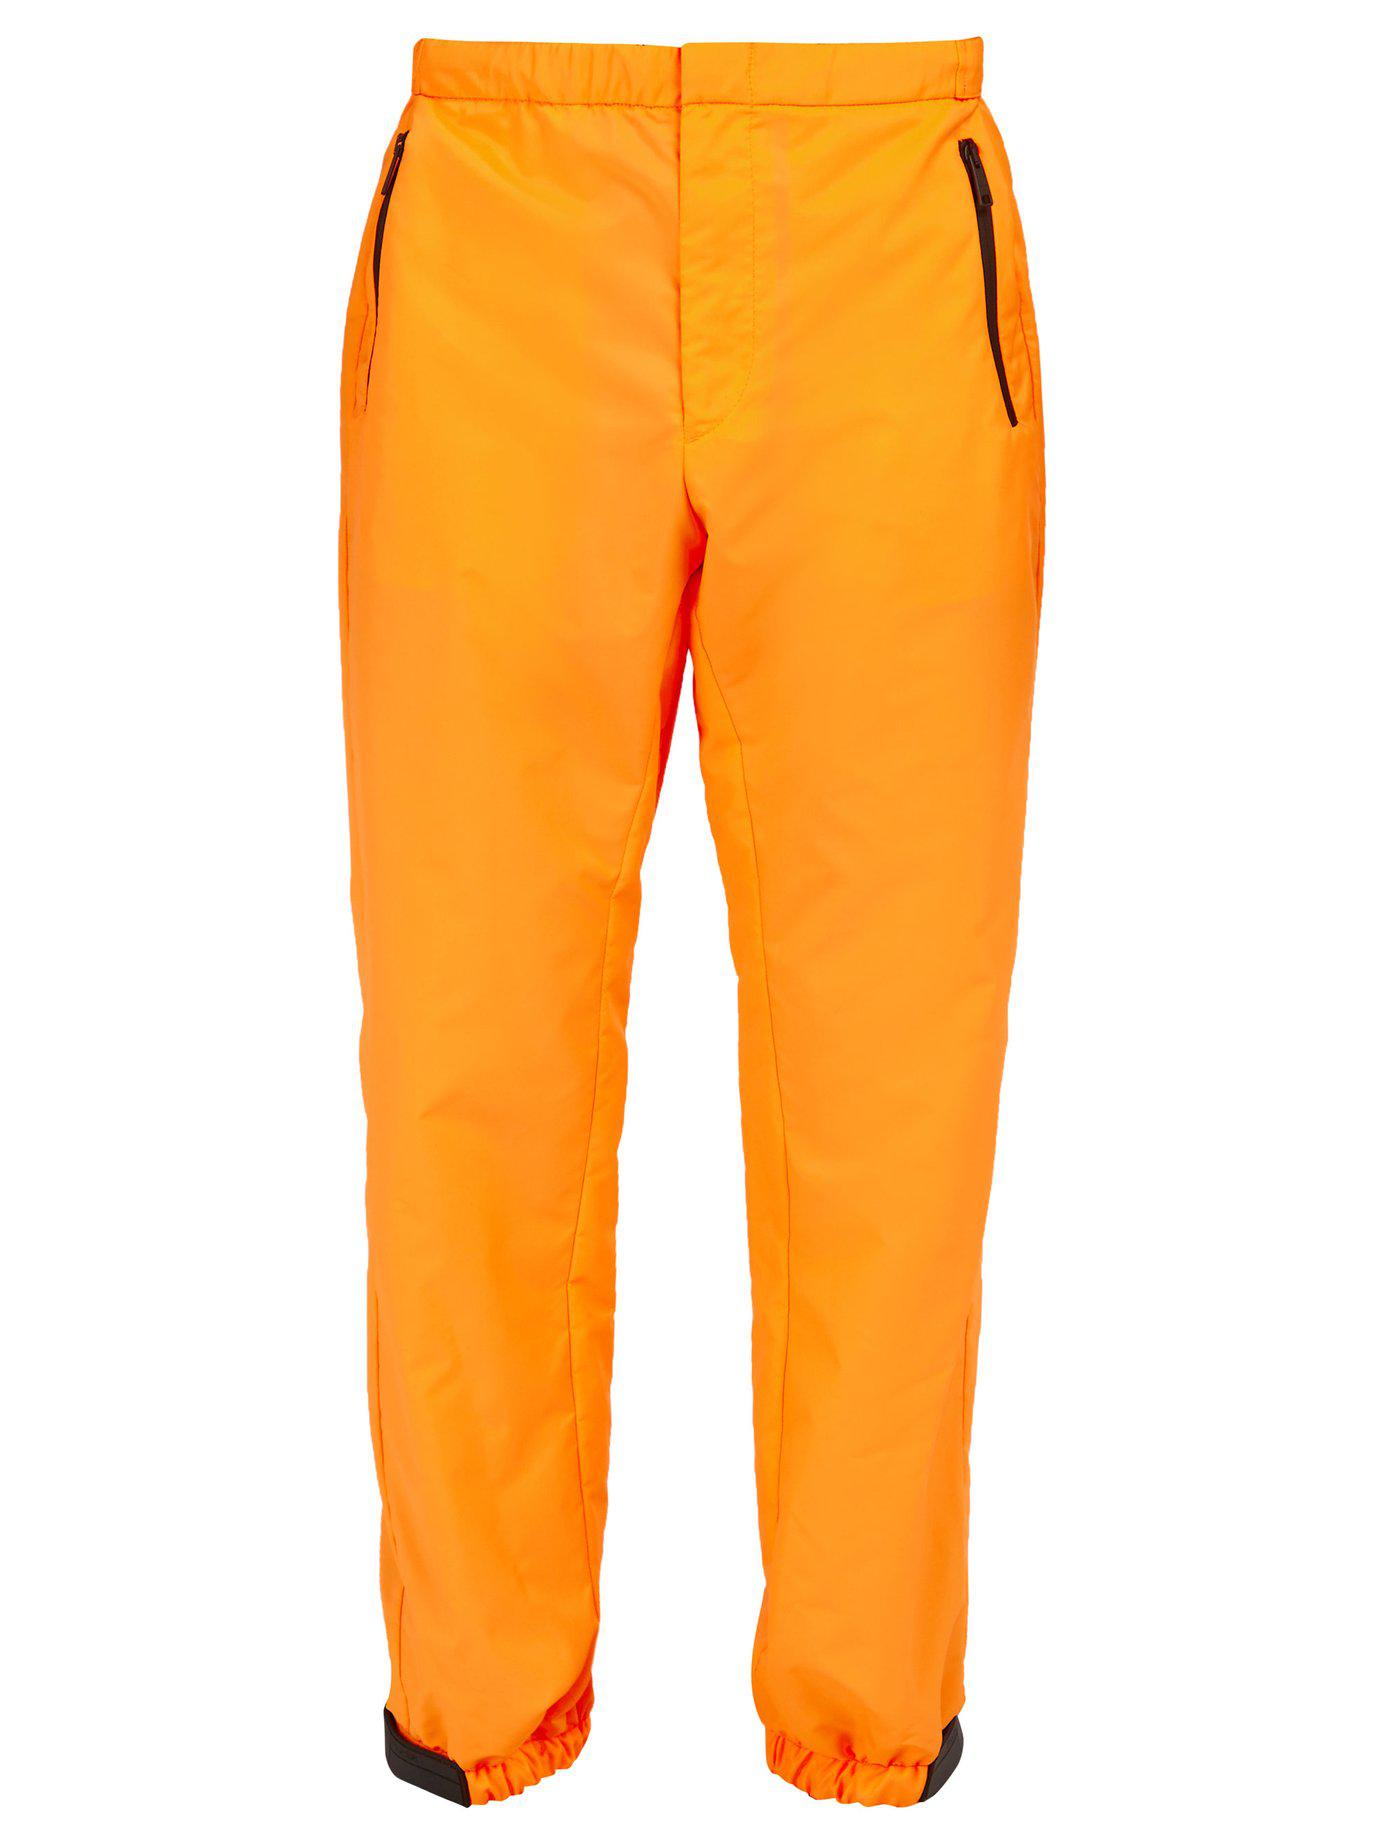 Prada Tela Technical Track Pants in Orange for Men - Lyst